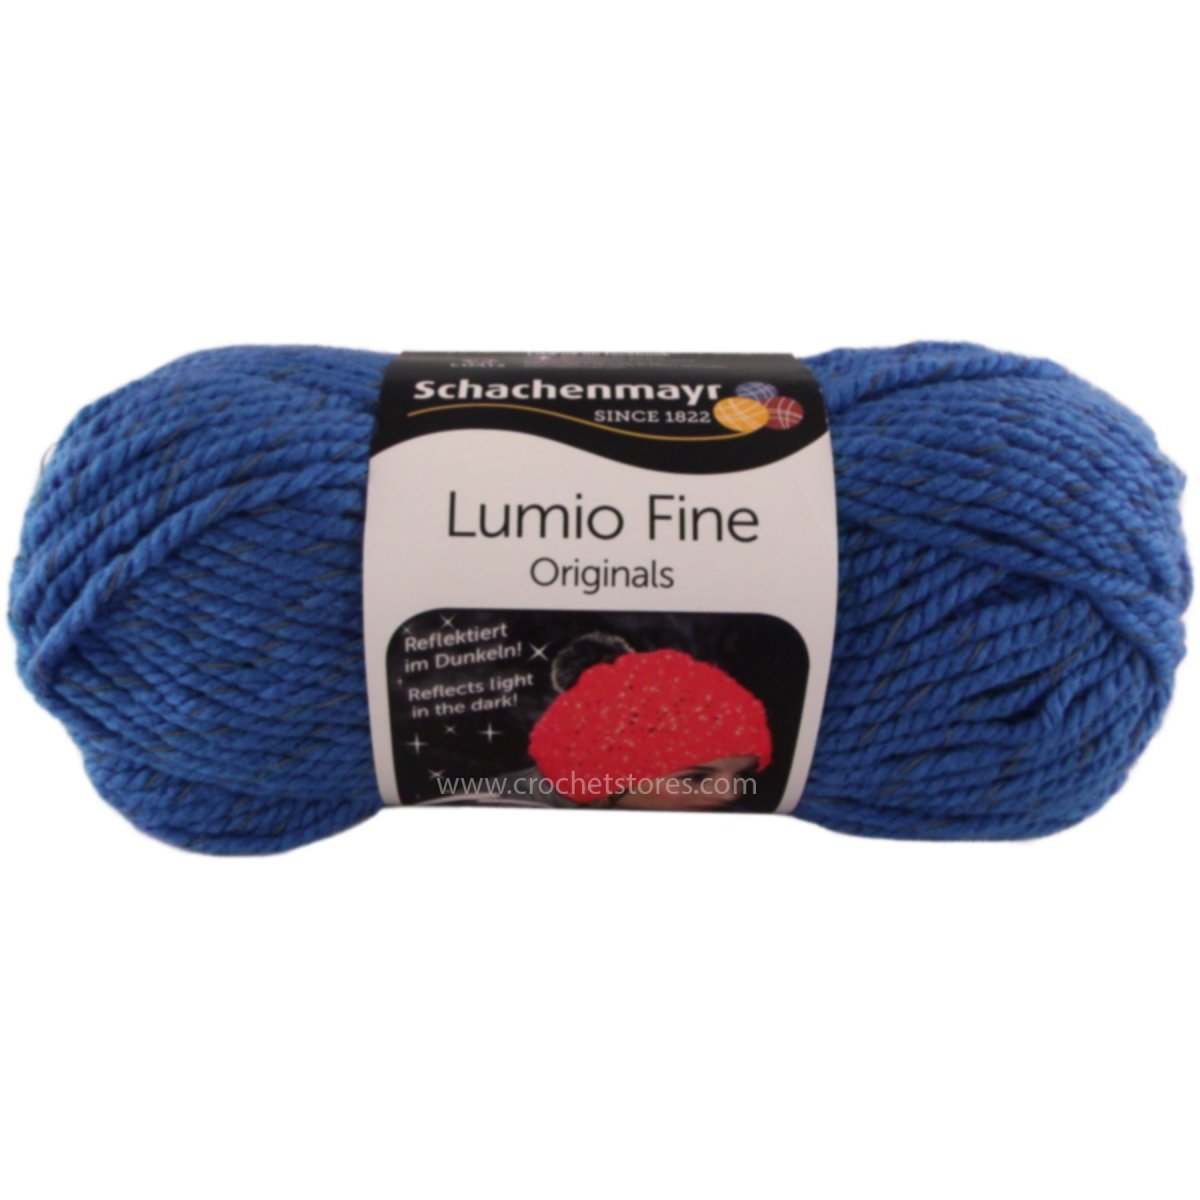 LUMIO FINE - Crochetstores9807557-1514053859108713